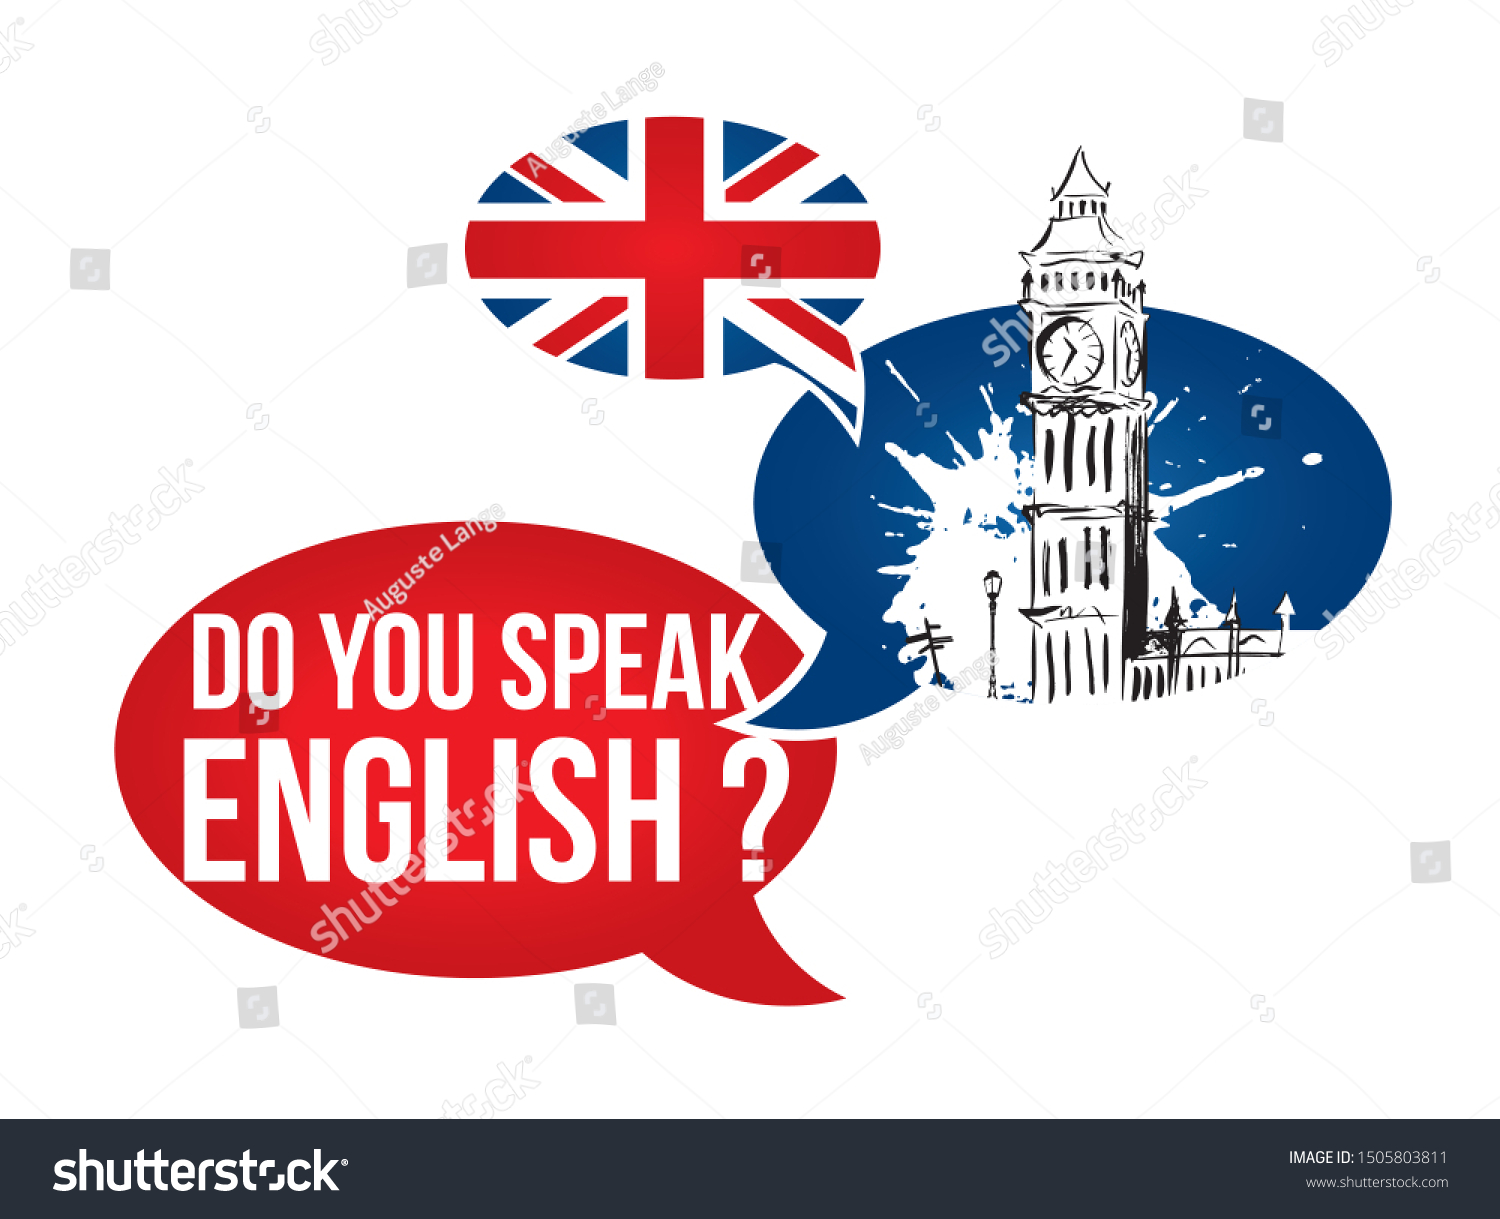 Do you speak english well. Английский язык логотип. Do you speak English картинки. Do you speak English надпись. Английский язык вектор.